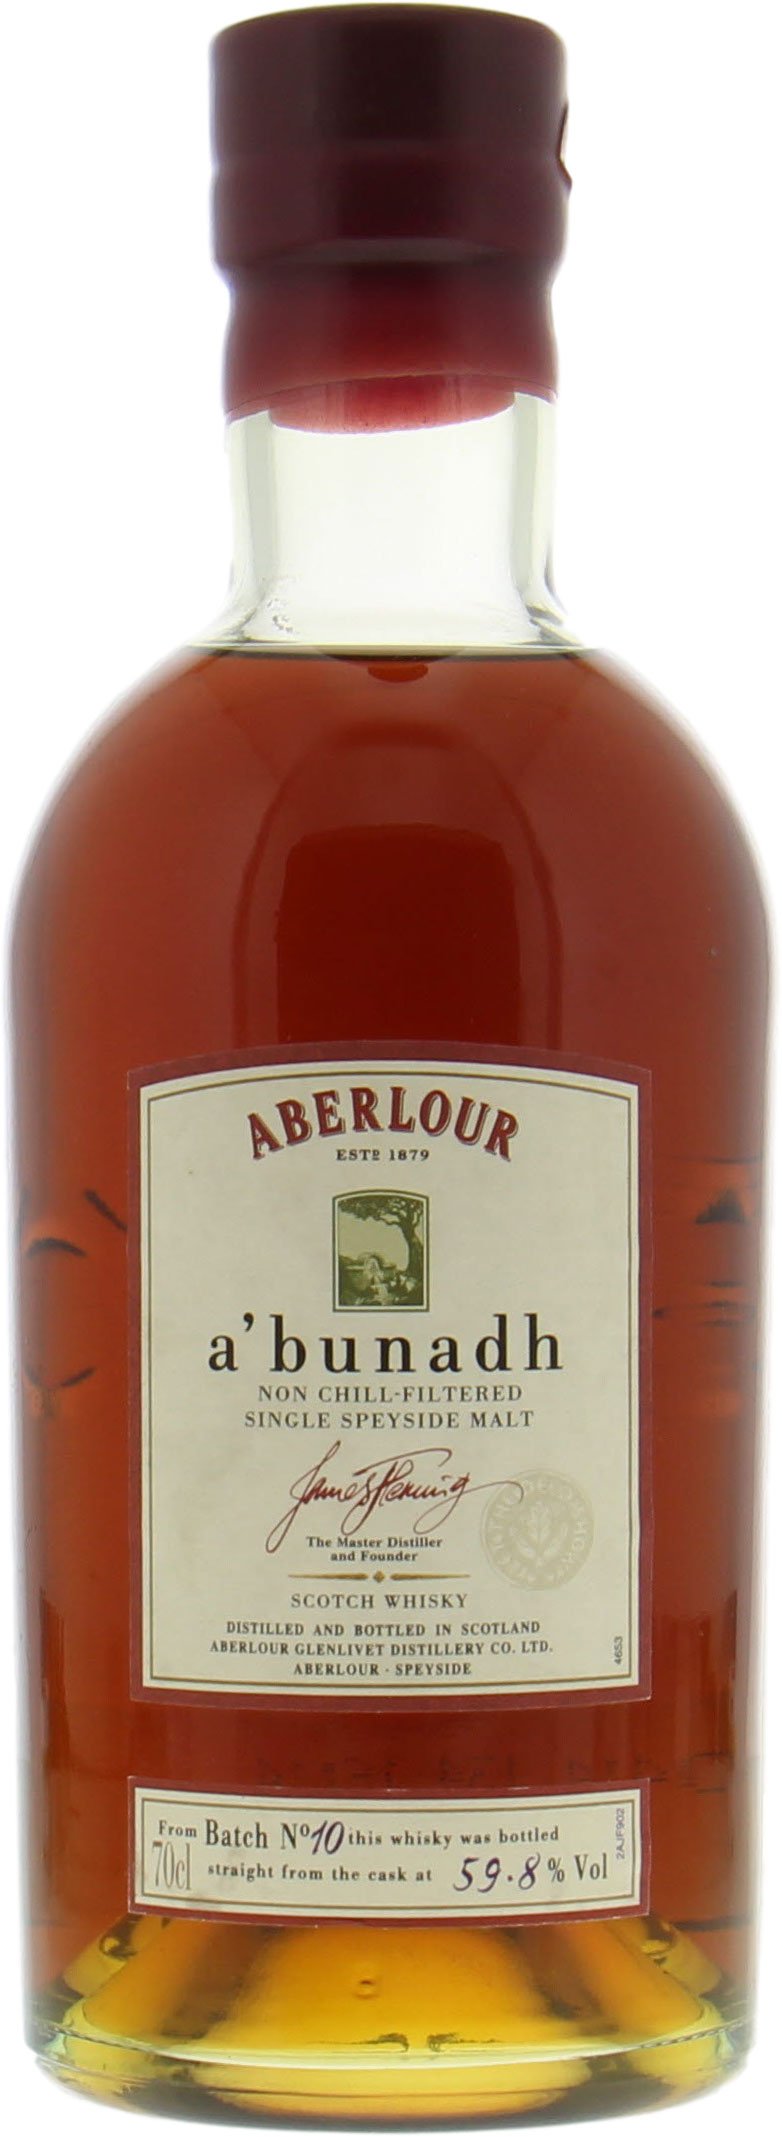 Aberlour - A'bunadh batch 10 59.8% NV No Original Container Included!